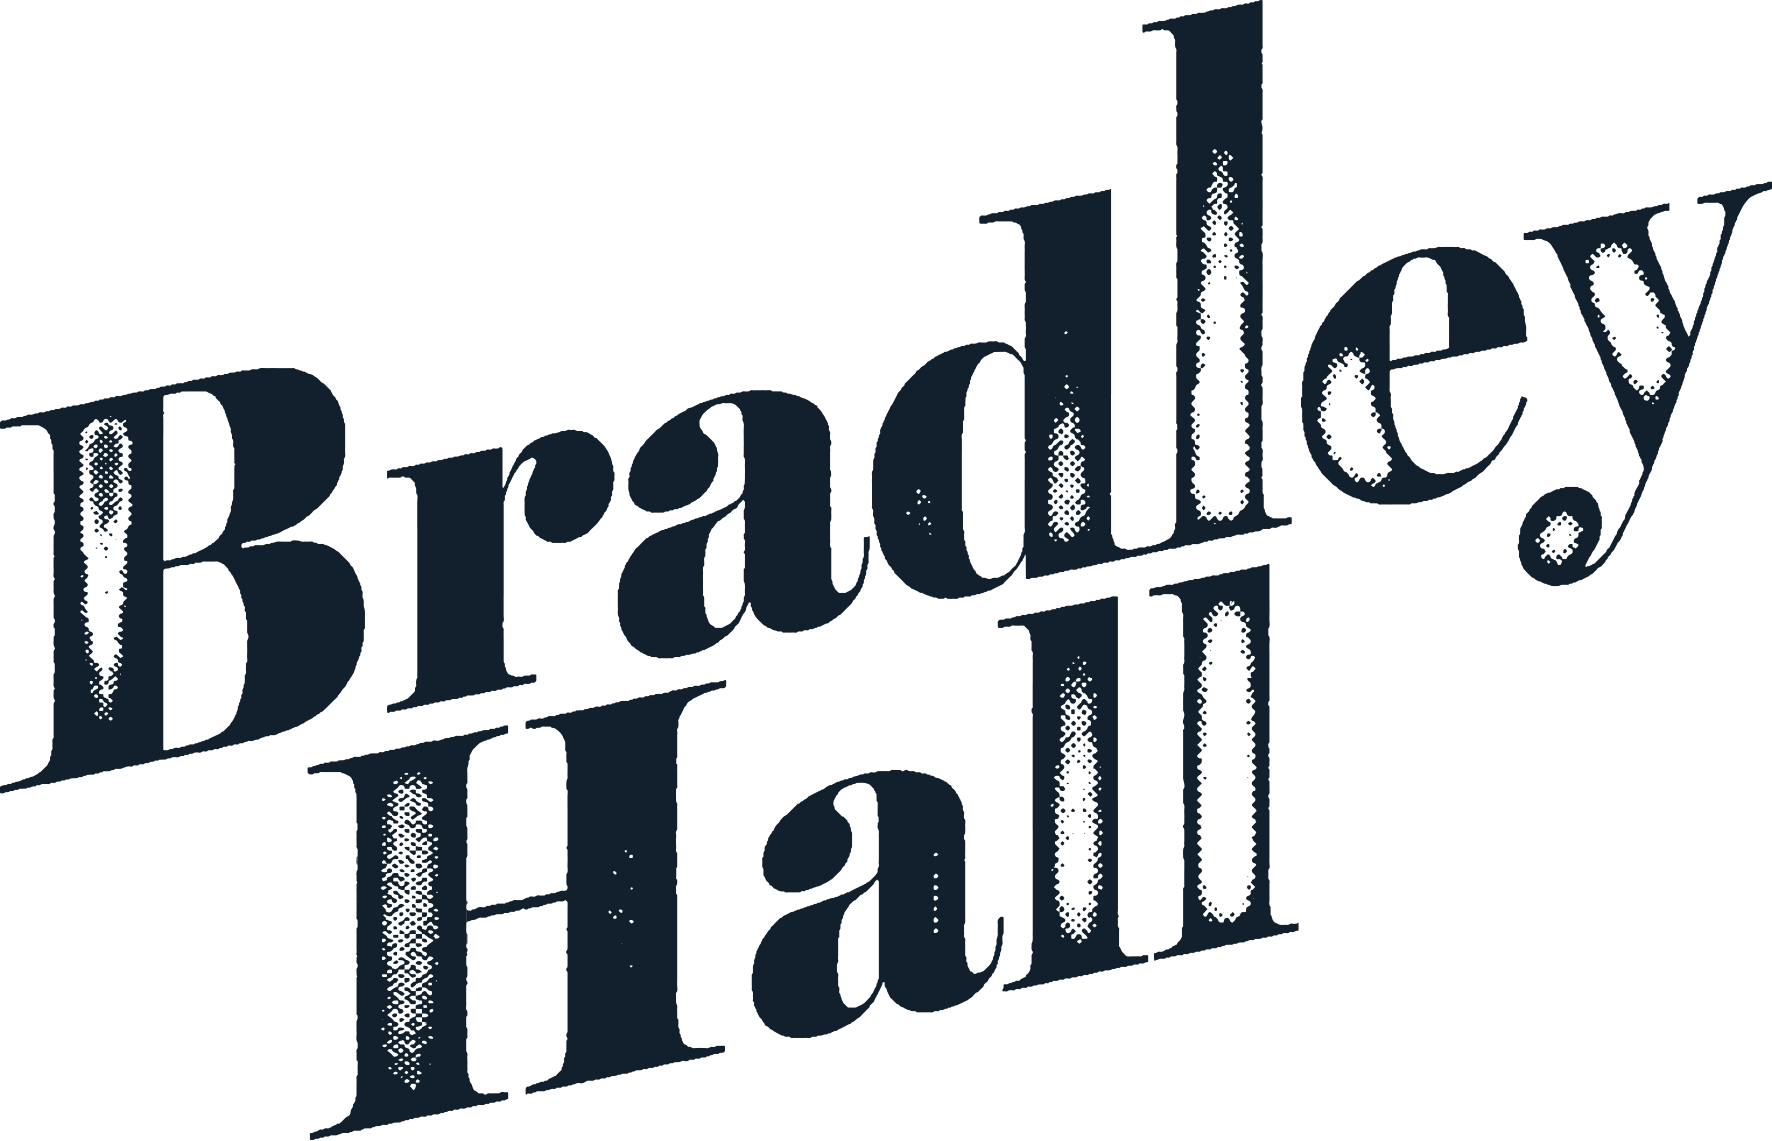 Bradley Hall